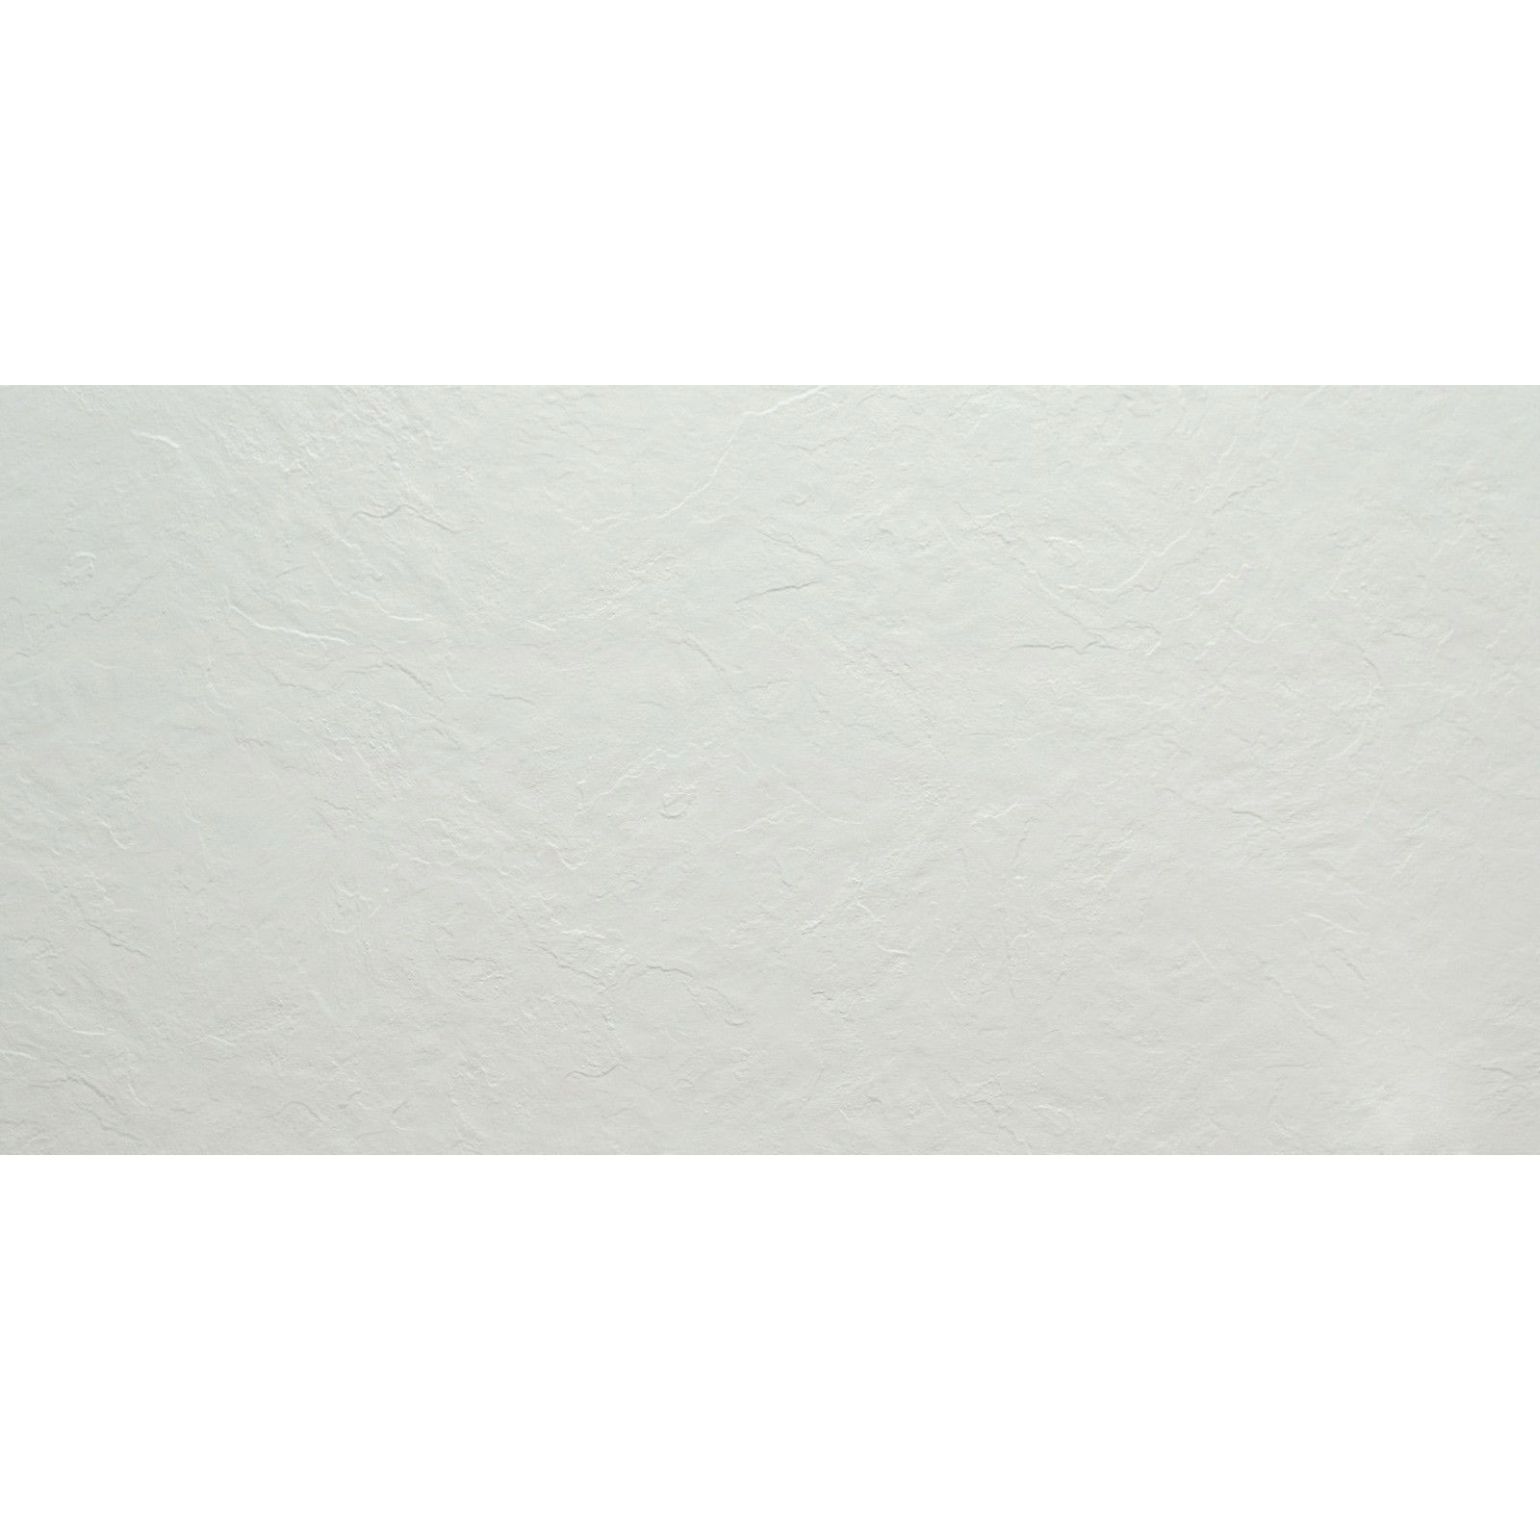 Керамогранит TileKraft Stonex Bianco Rustic 60х120 см (3041)